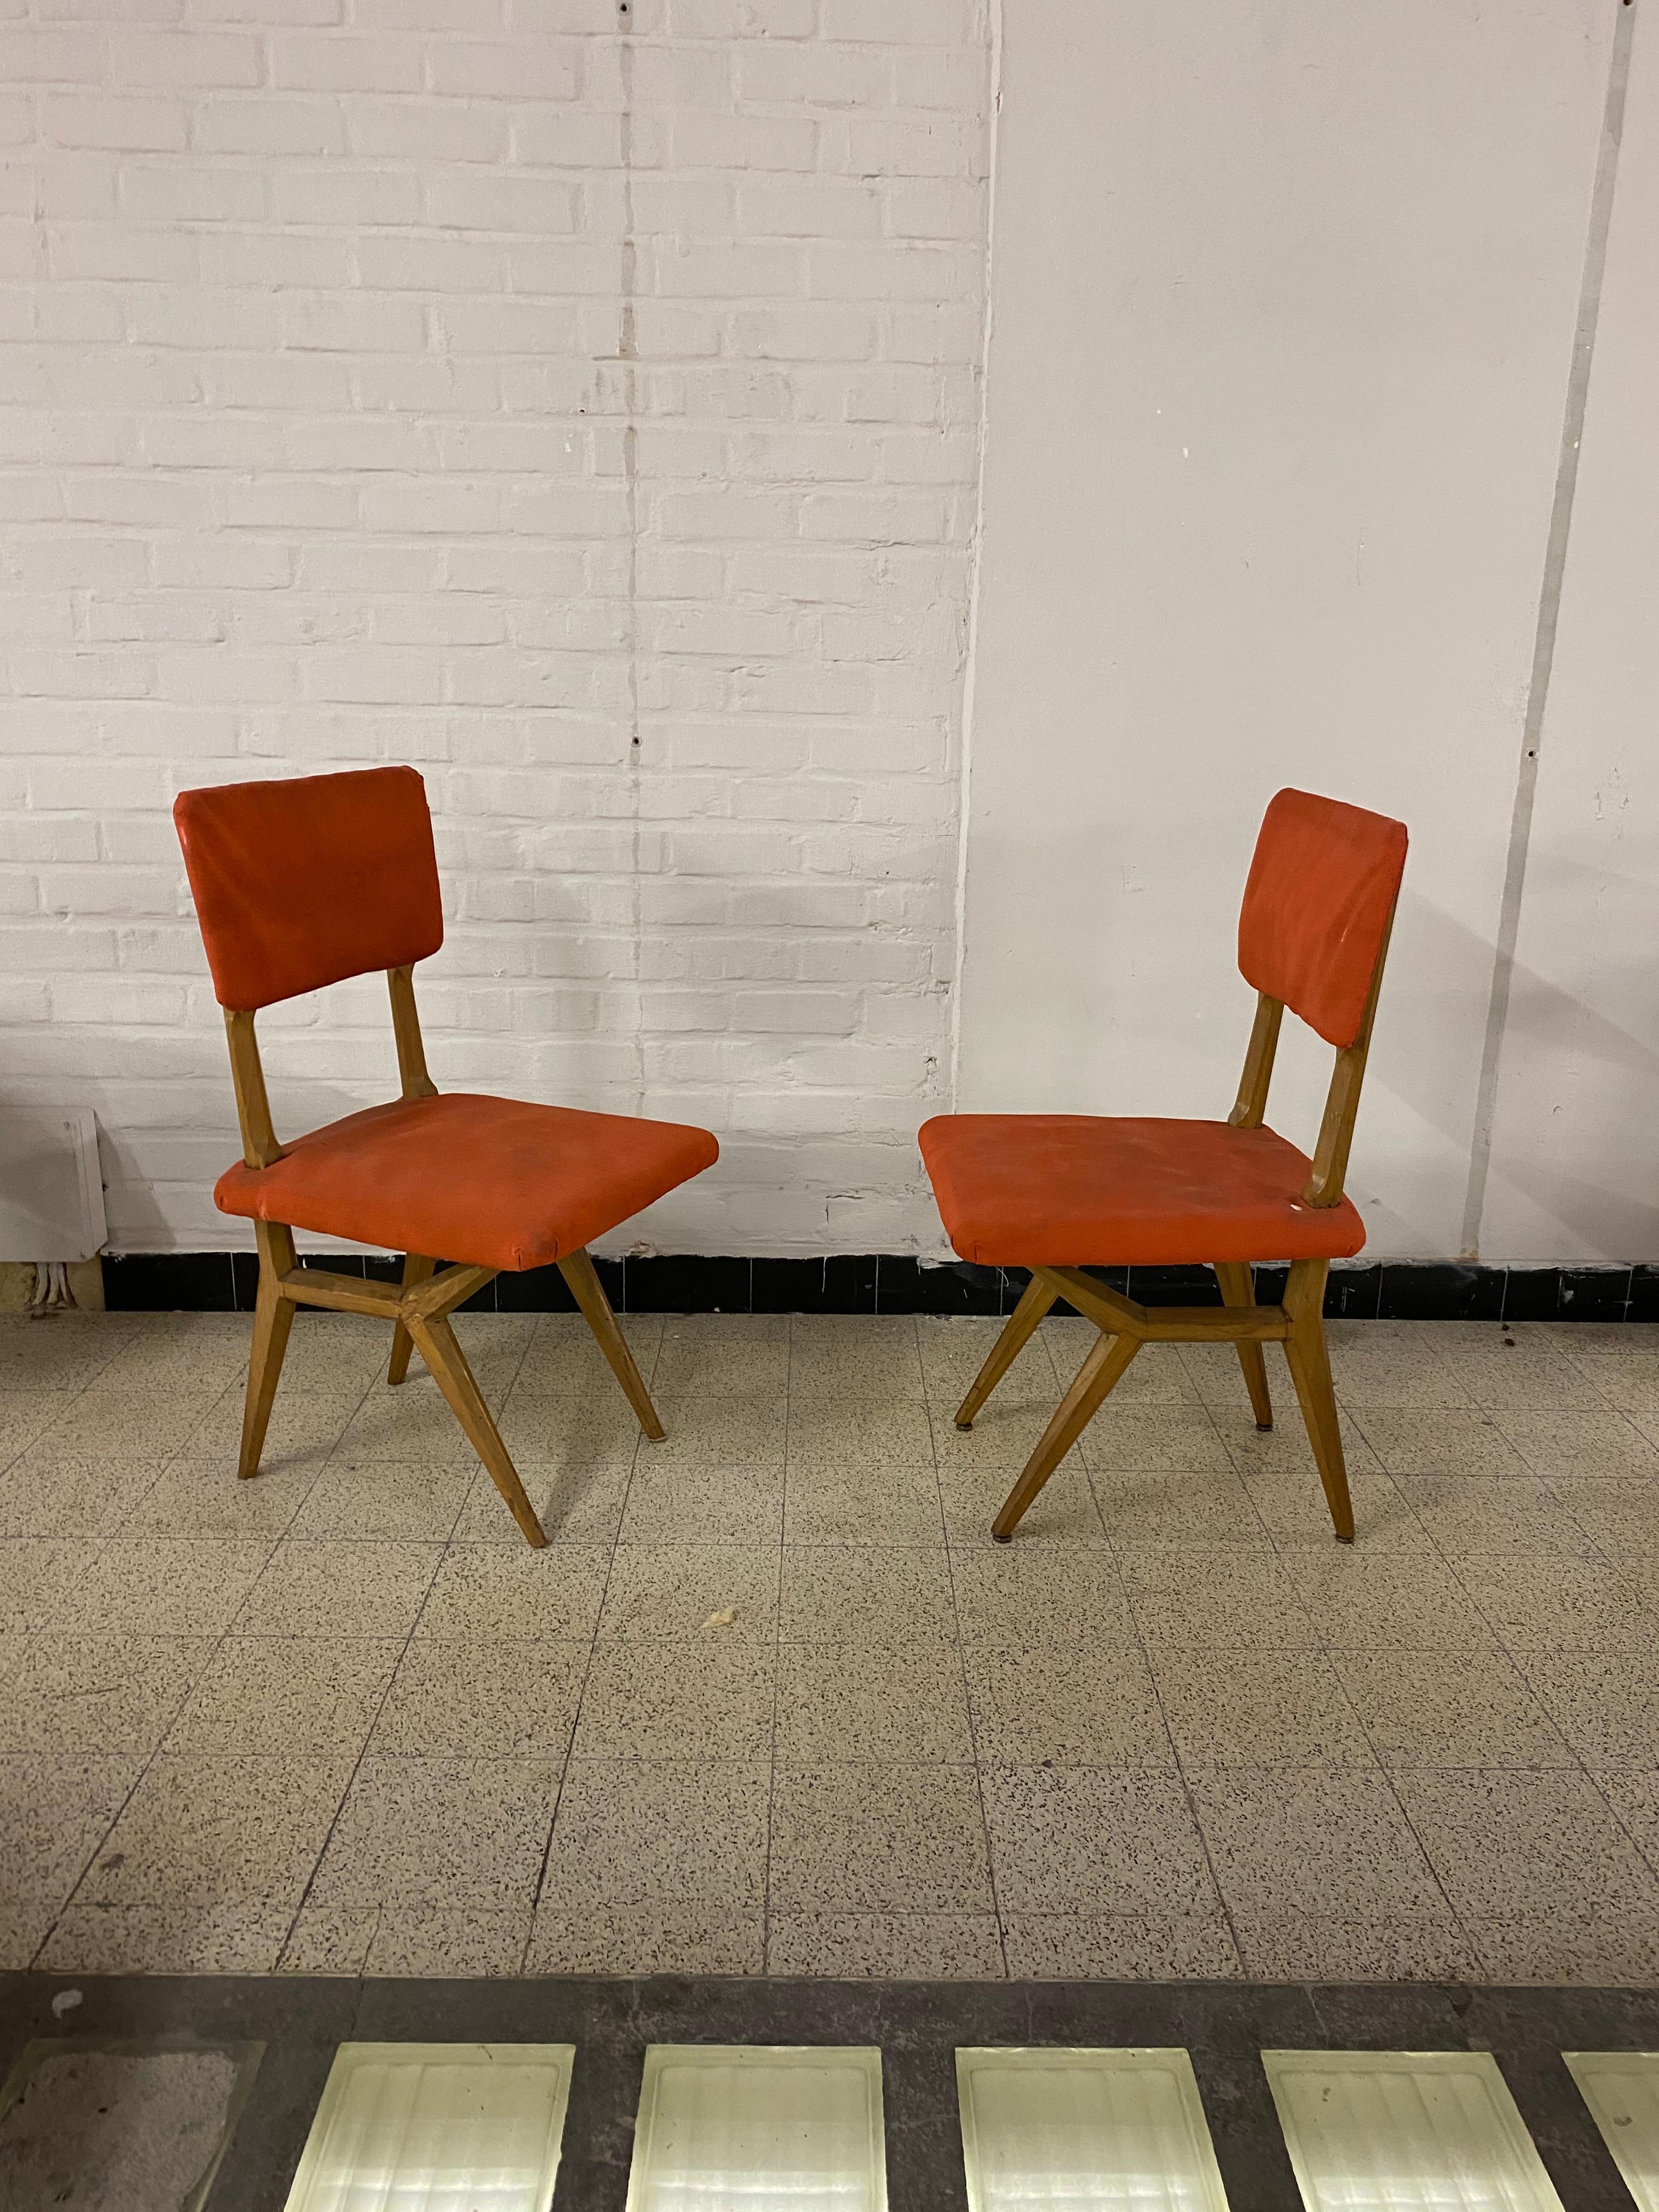 2 chairs, Italy, circa 1950-1960.